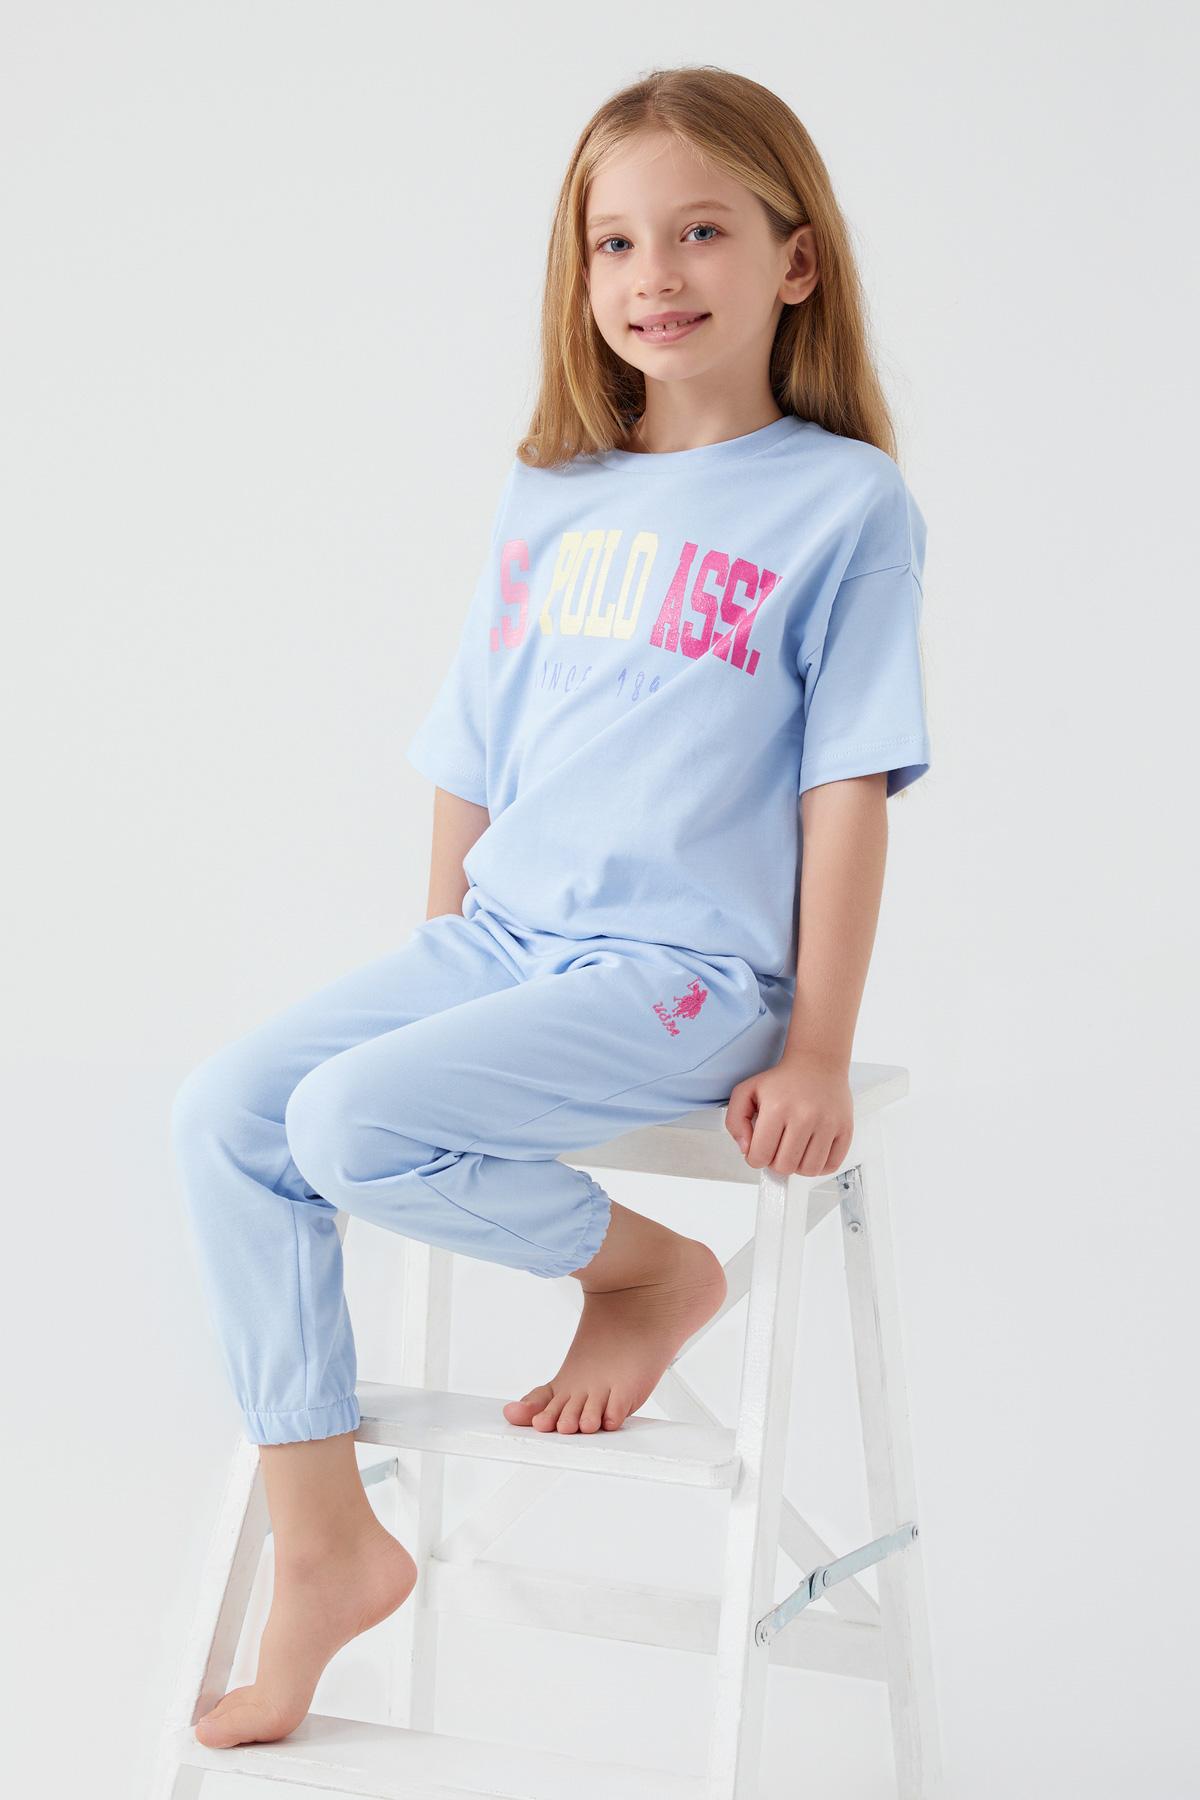 Selected image for U.S. POLO ASSN. Pidžama za devojčice US1418-4 plava